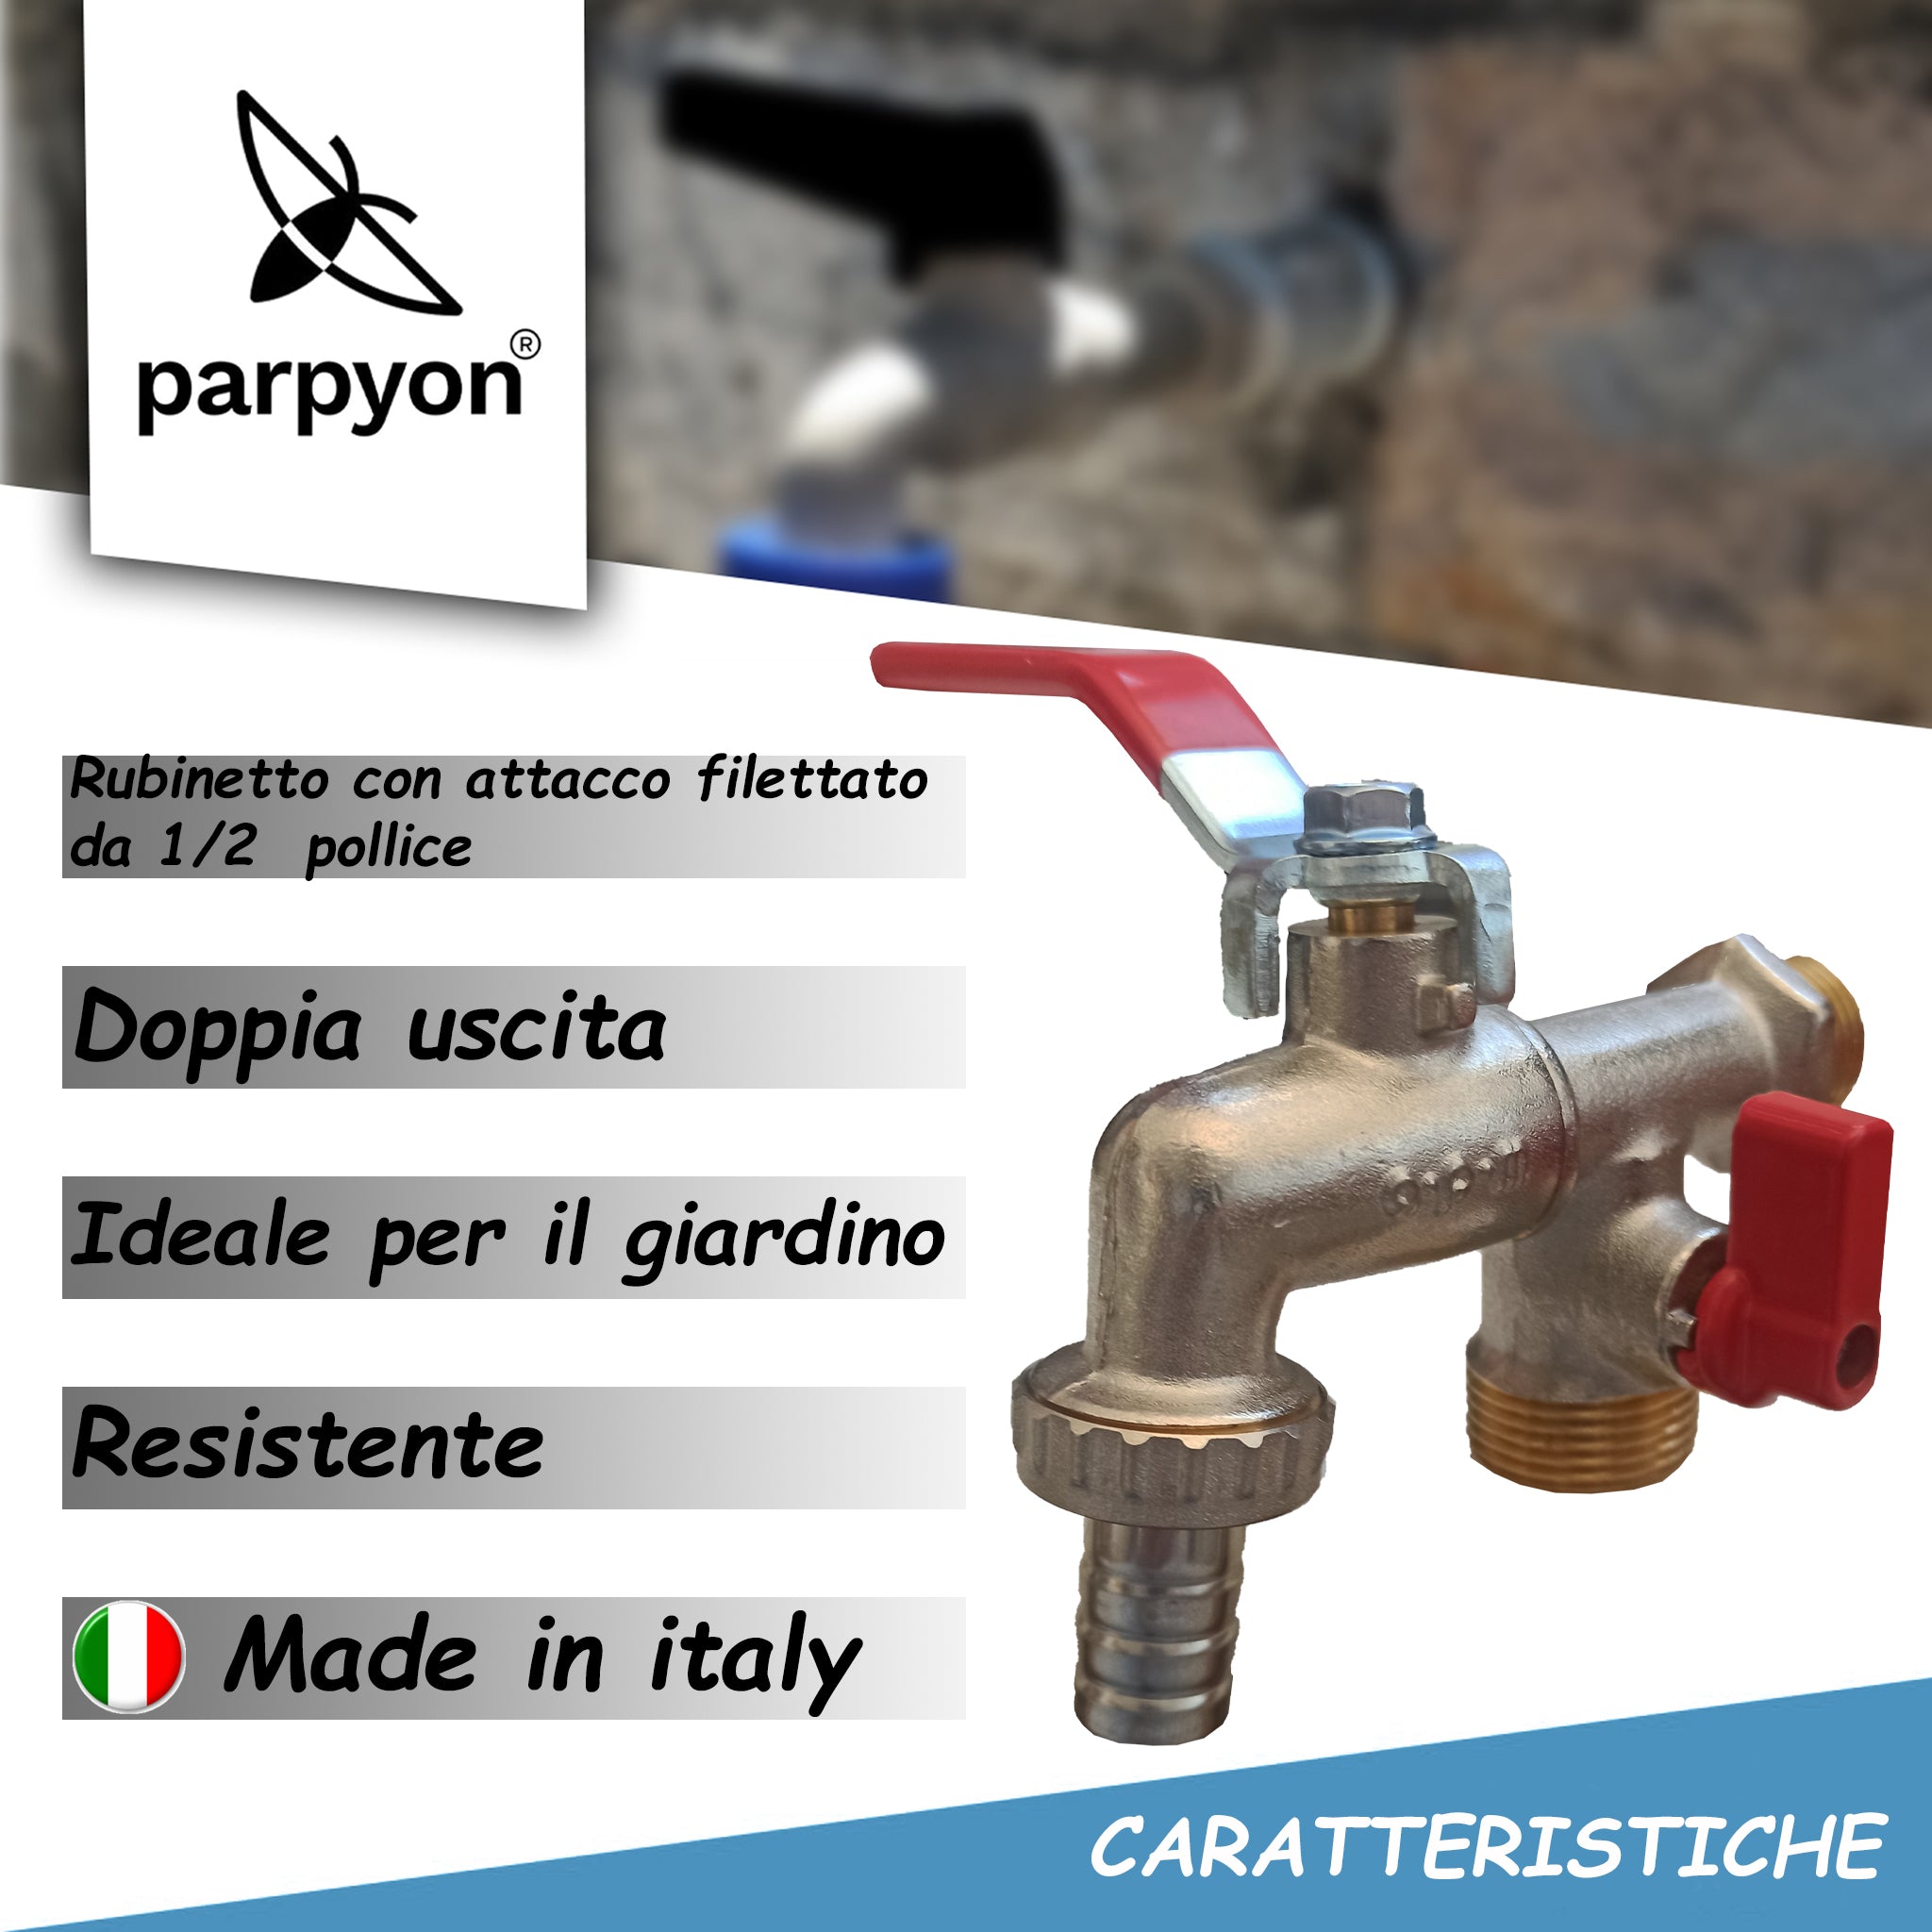 Parpyon® Rubinetto Giardino 1/2 pollice con porta gomma - Prodotto